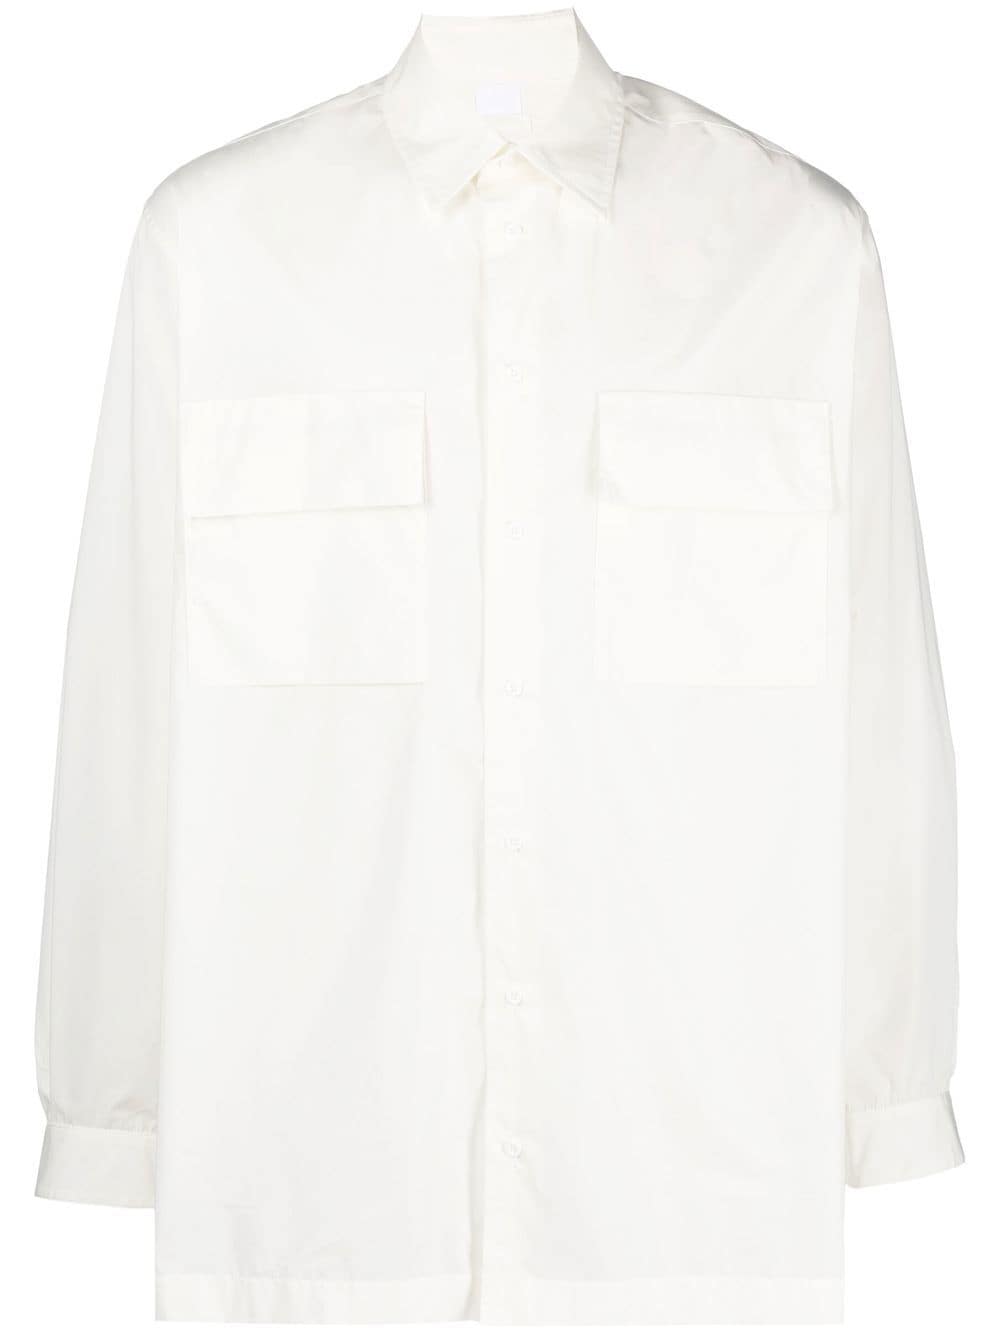 Nike button-up patch pocket shirt - White von Nike